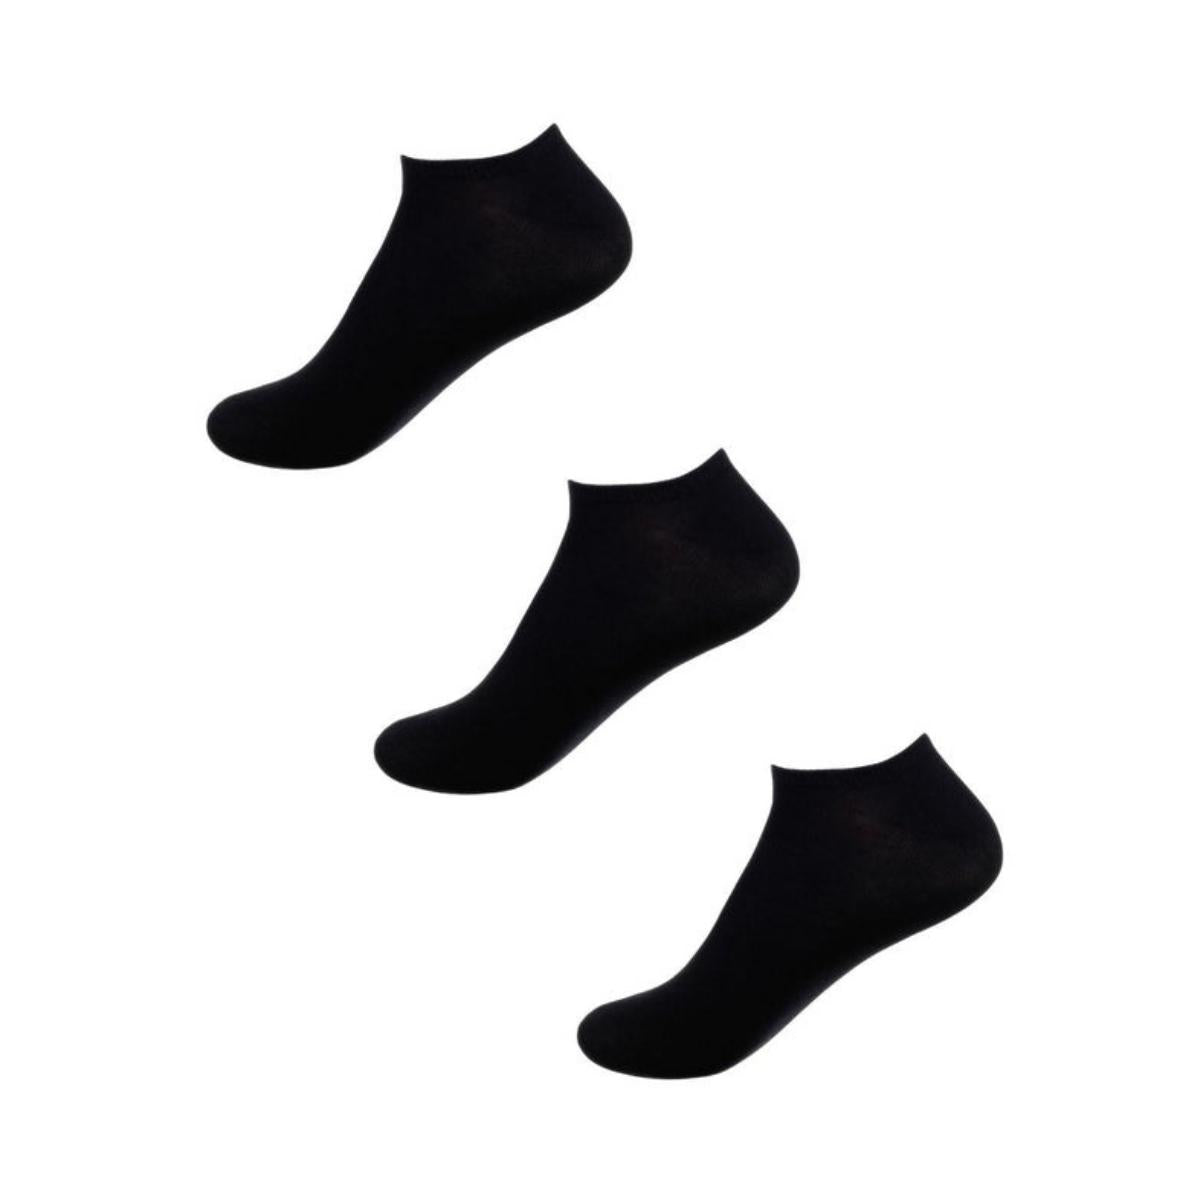 Ladies size 5-8 / Black - CalmCare 3 PACK Sensory Ankle Socks | Adult - Socks - CalmCare